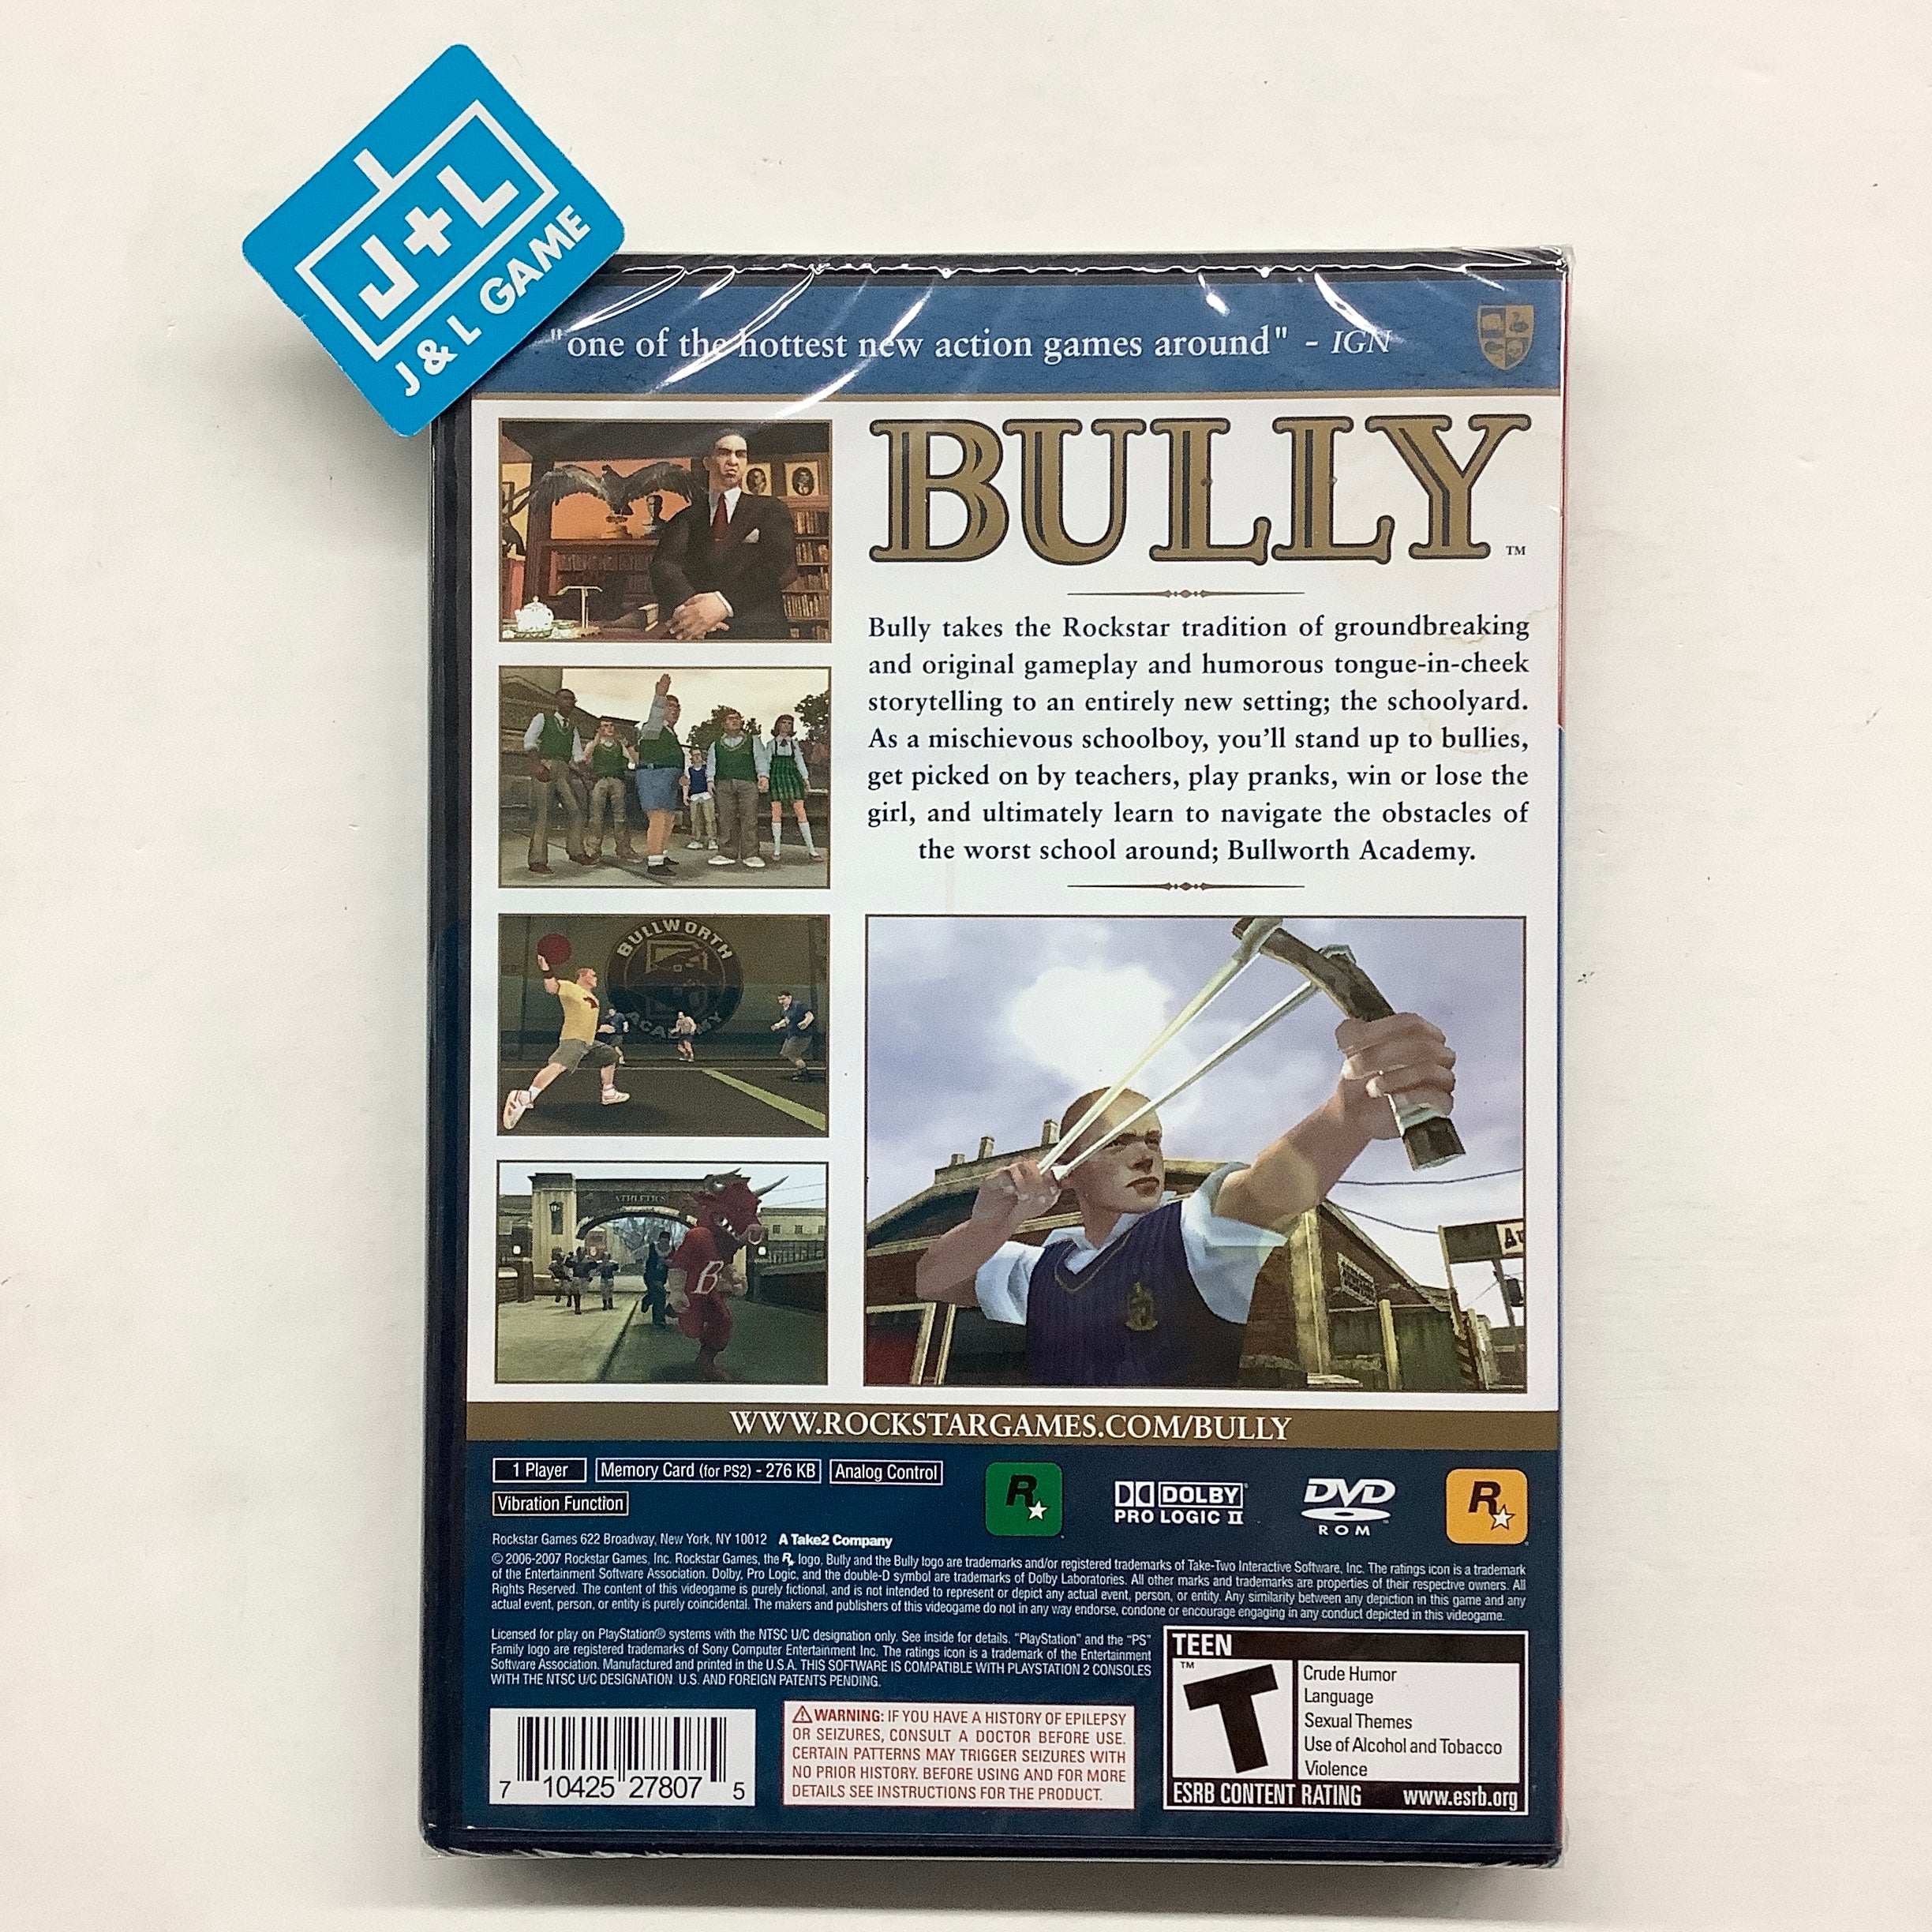 Bully (Greatest Hits) - (PS2) PlayStation 2 Video Games Rockstar Games   